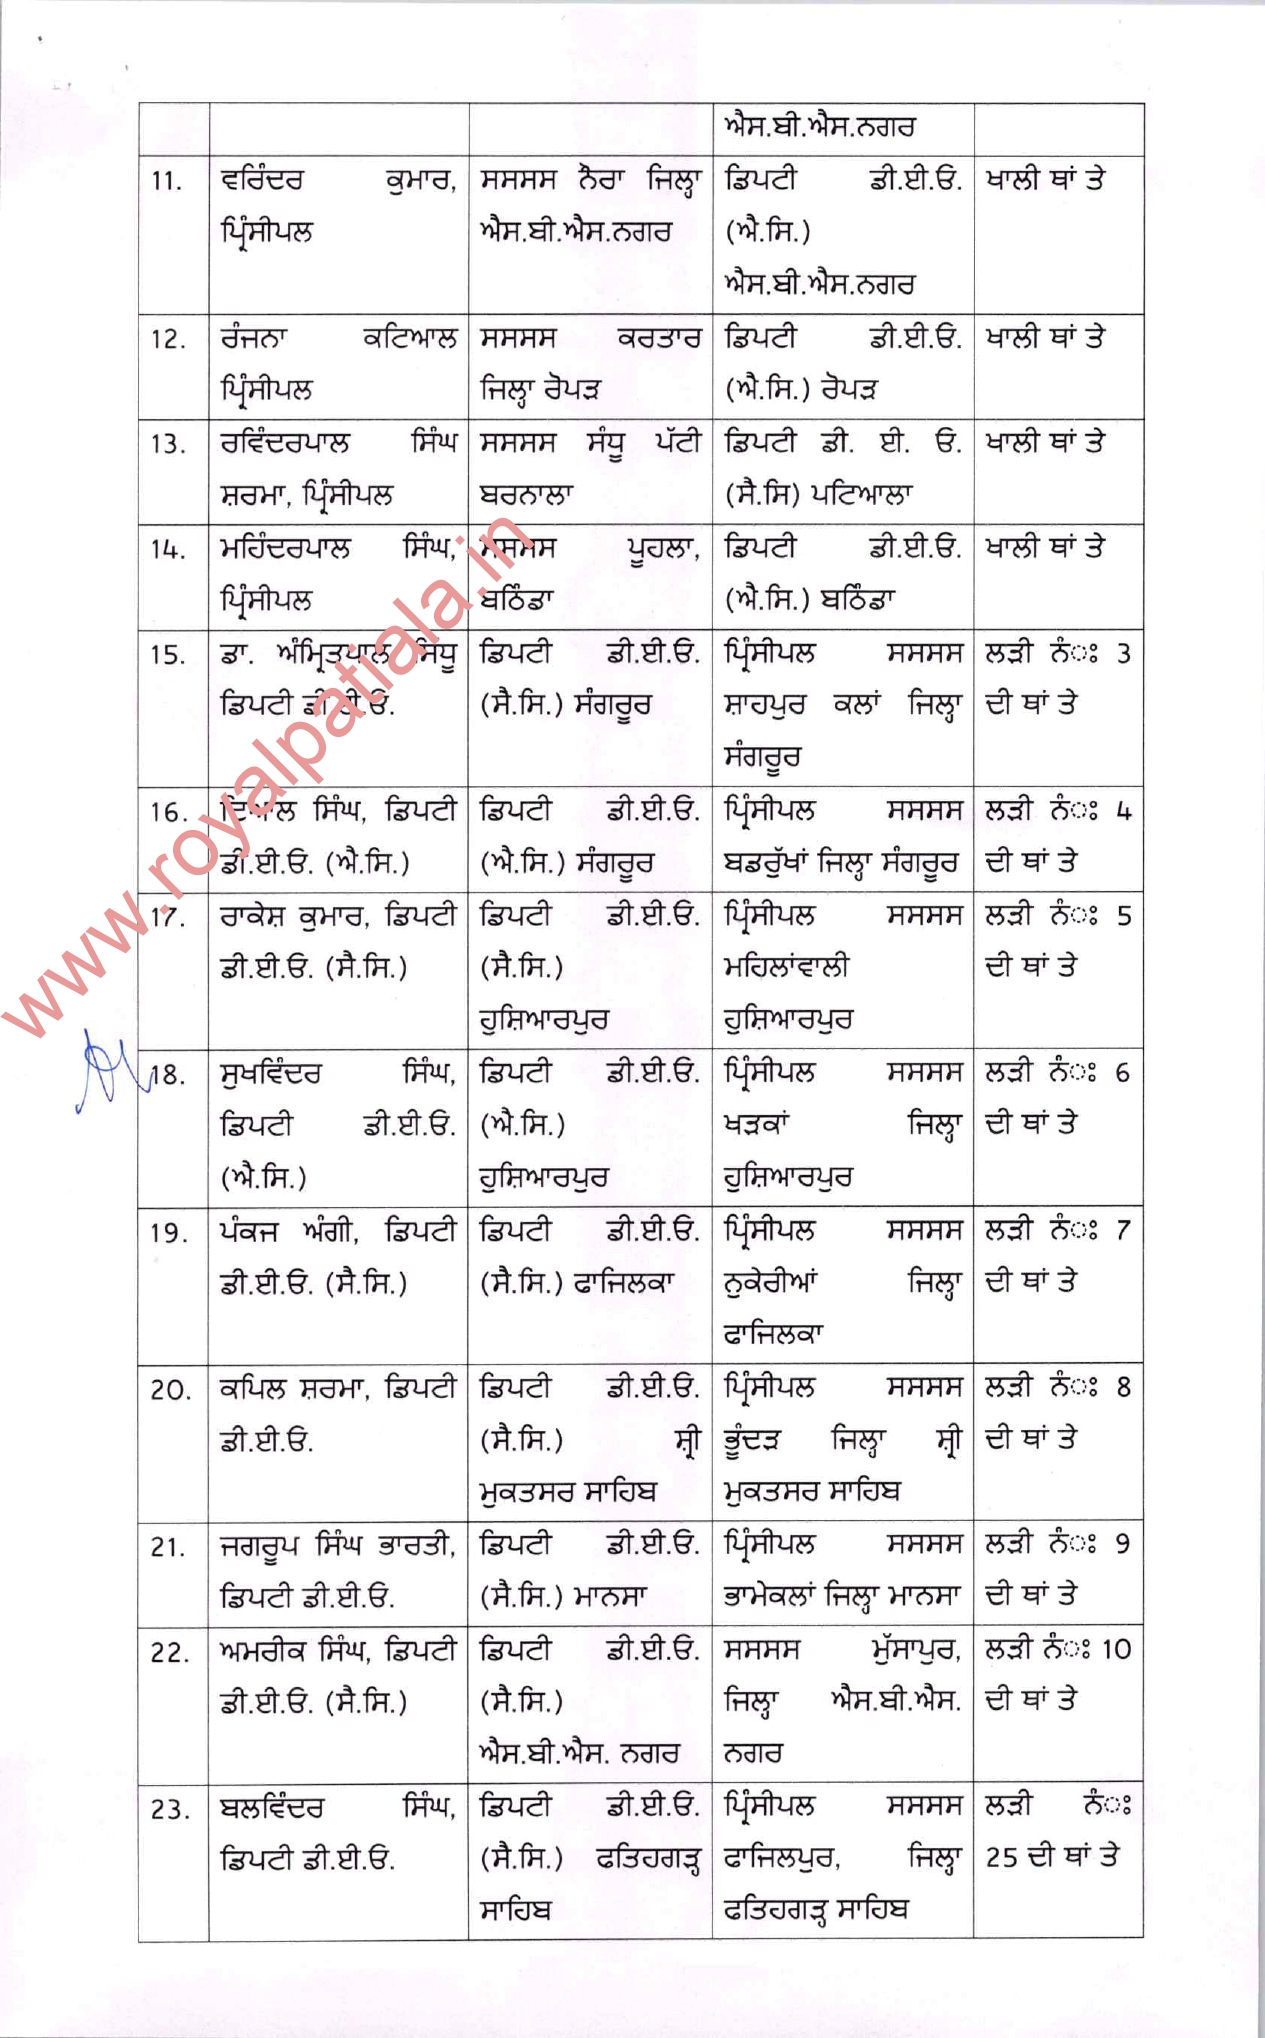 Punjab education department transfers; 25 PES transferred 